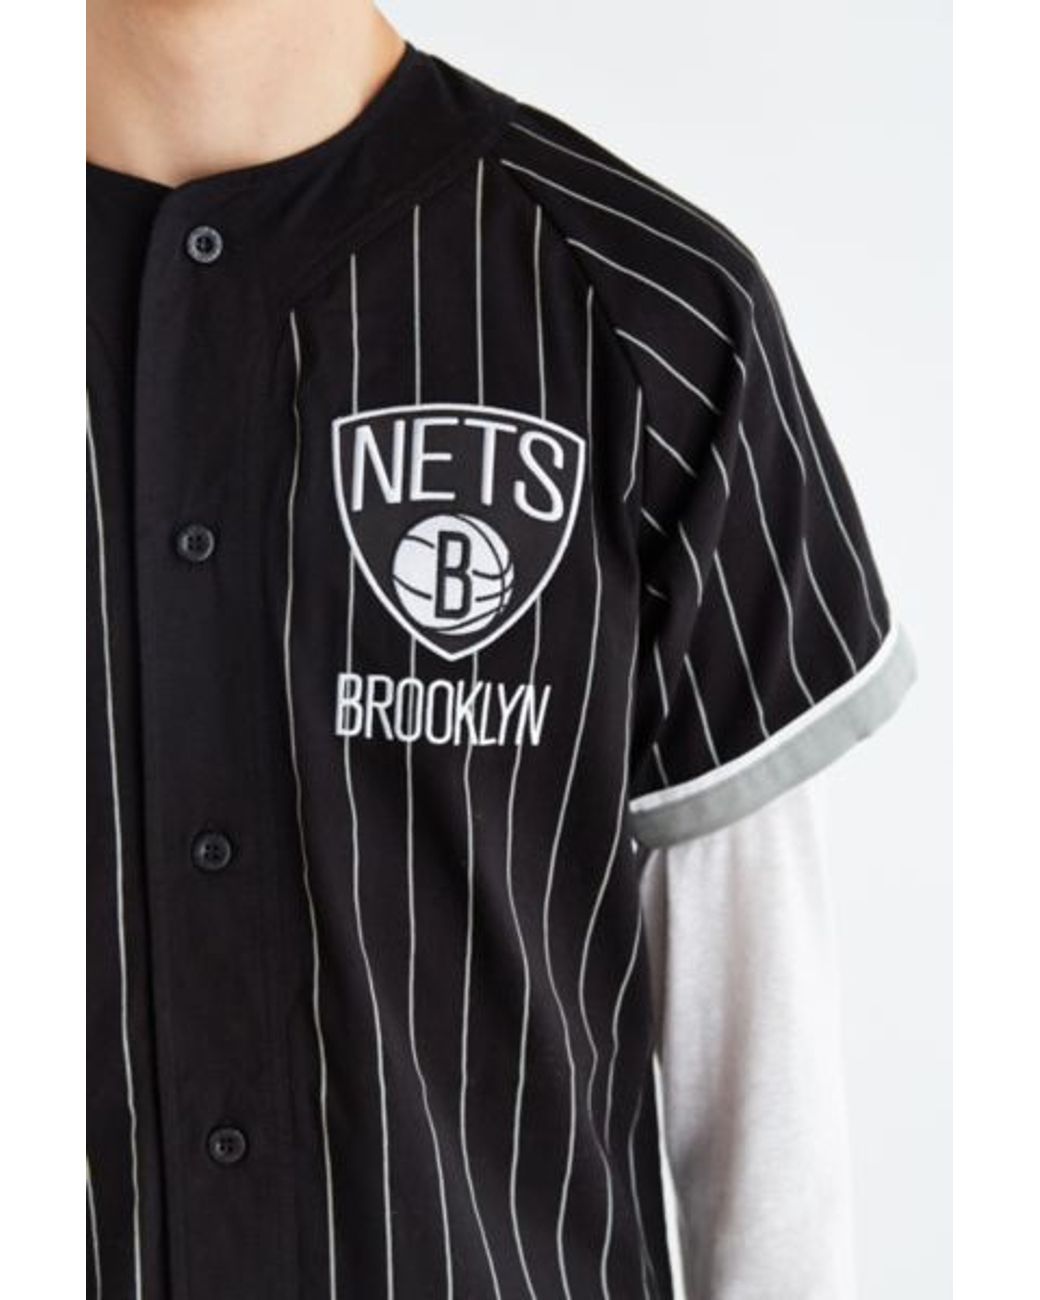 Mitchell & Ness Nba Brooklyn Nets Baseball Jersey in Black for Men